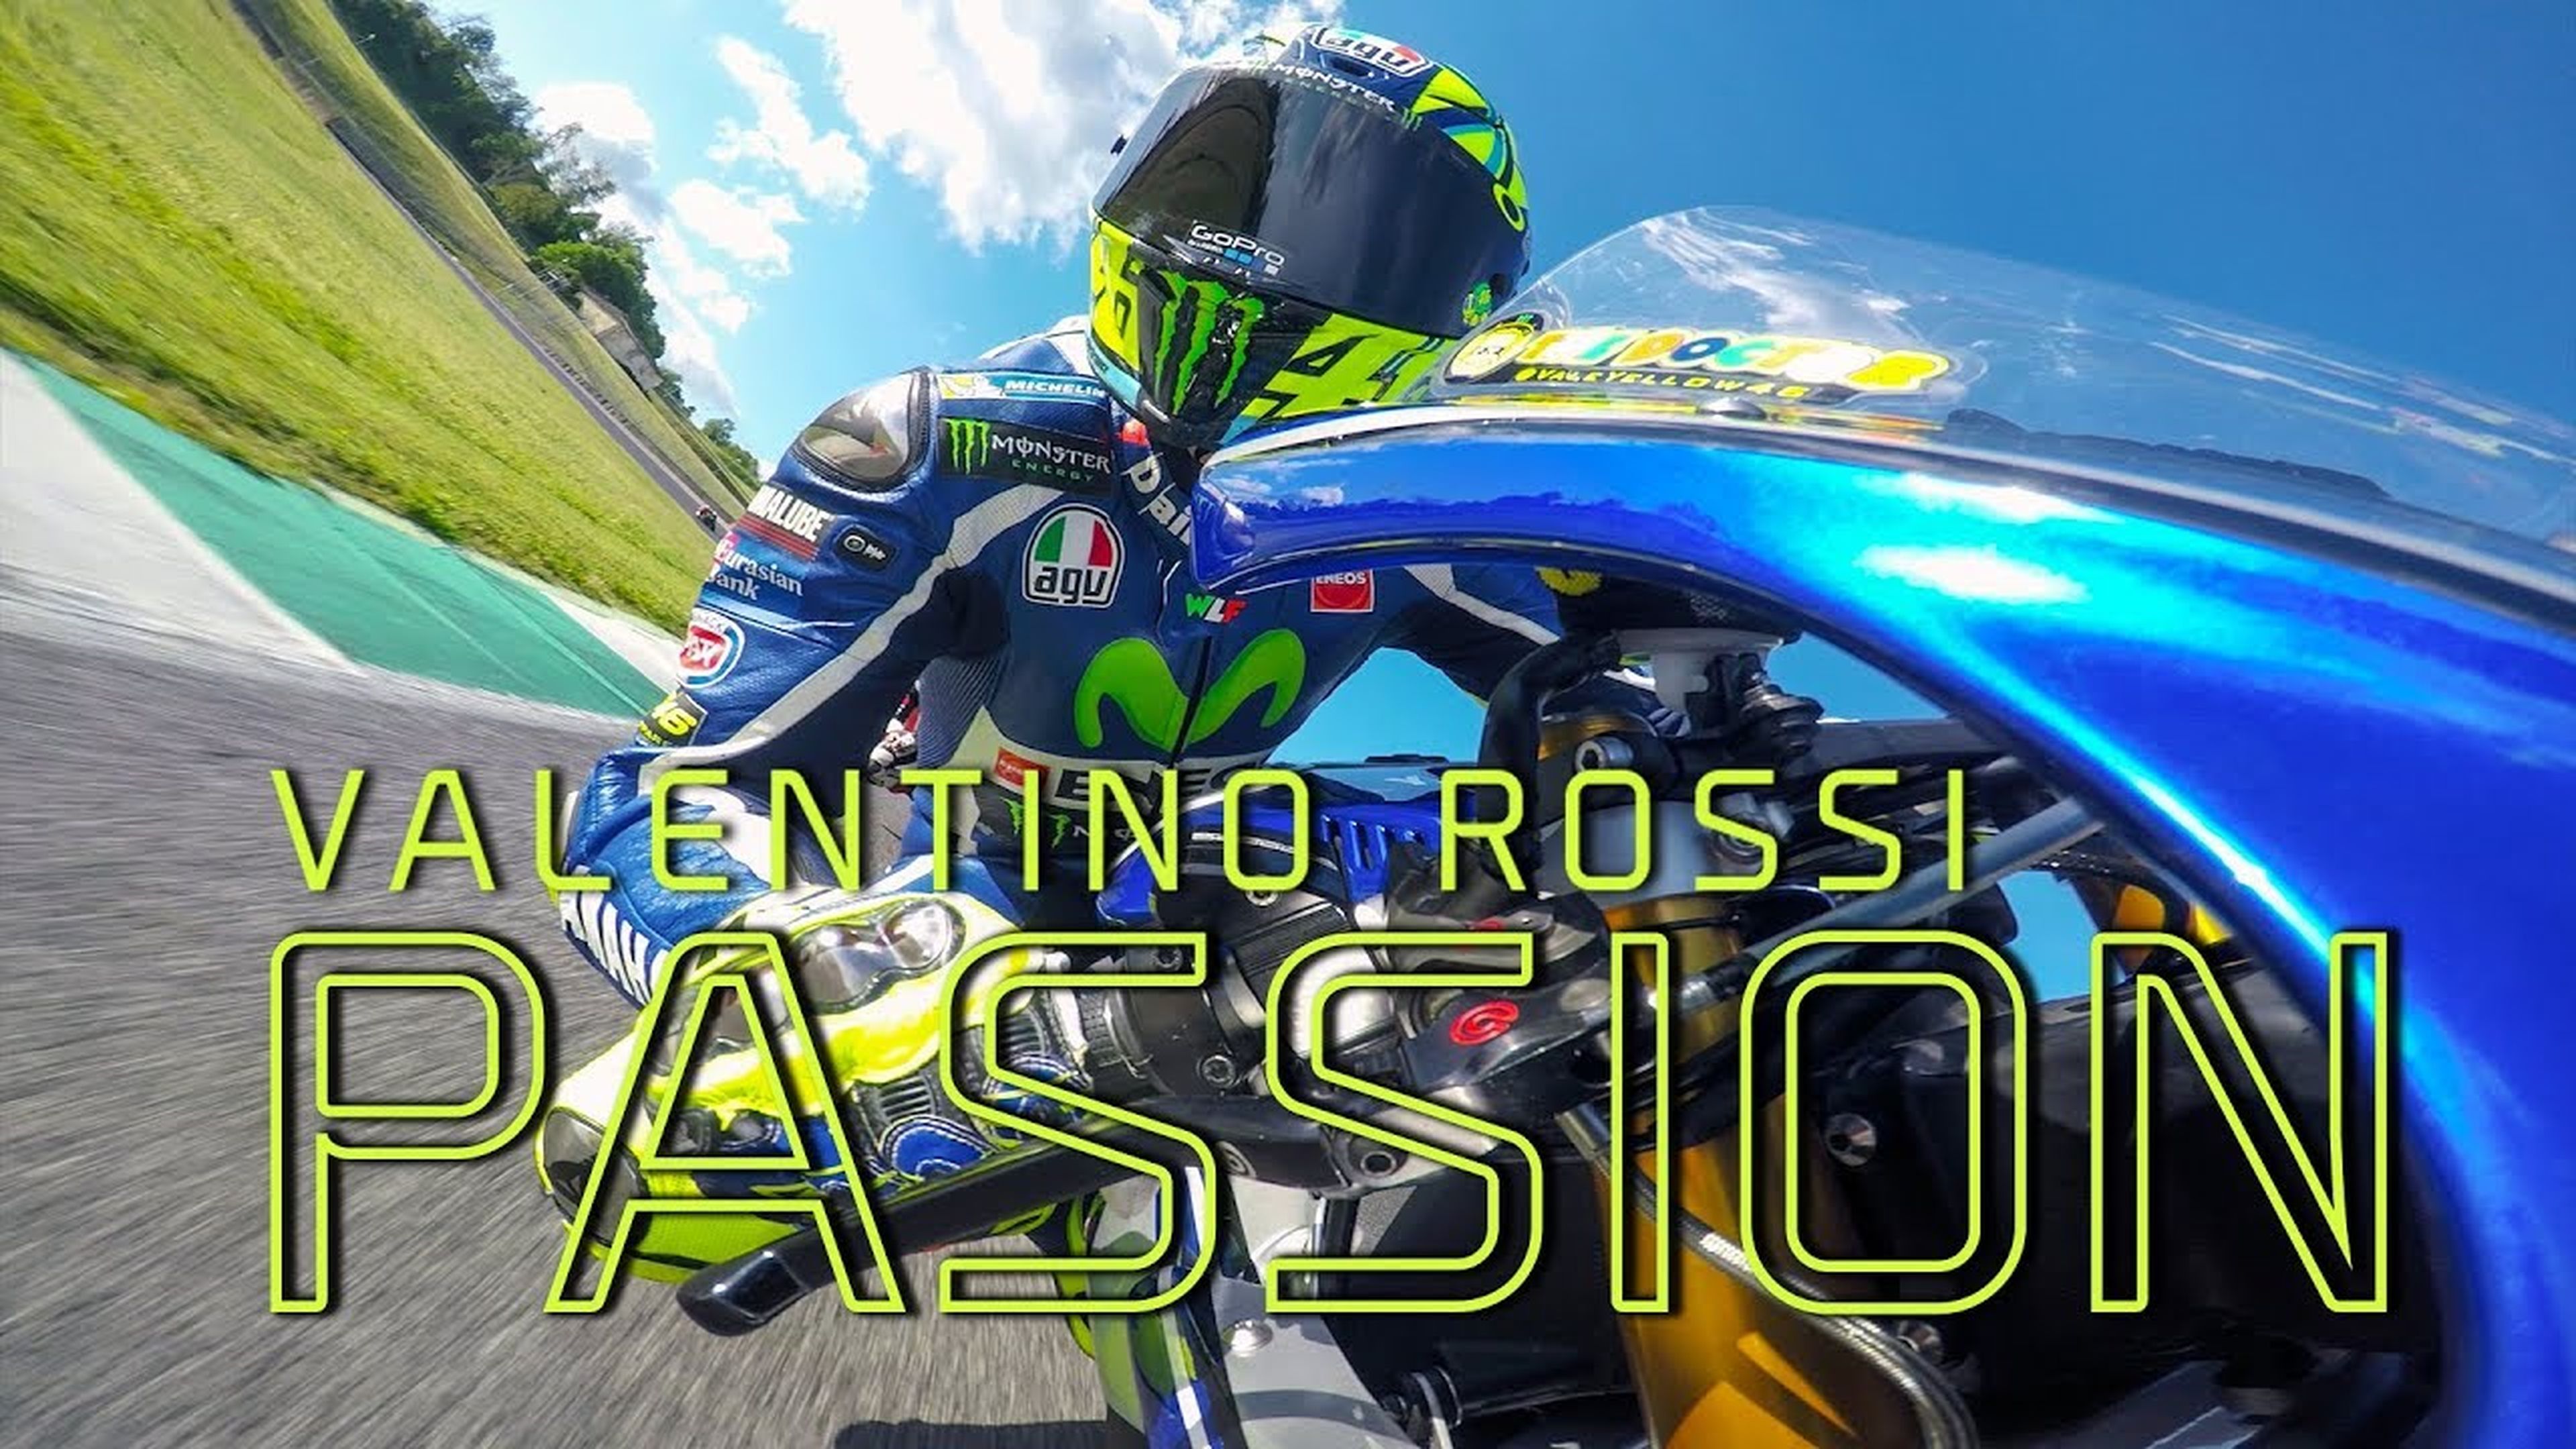 Pasión, documental sobre Valentino Rossi